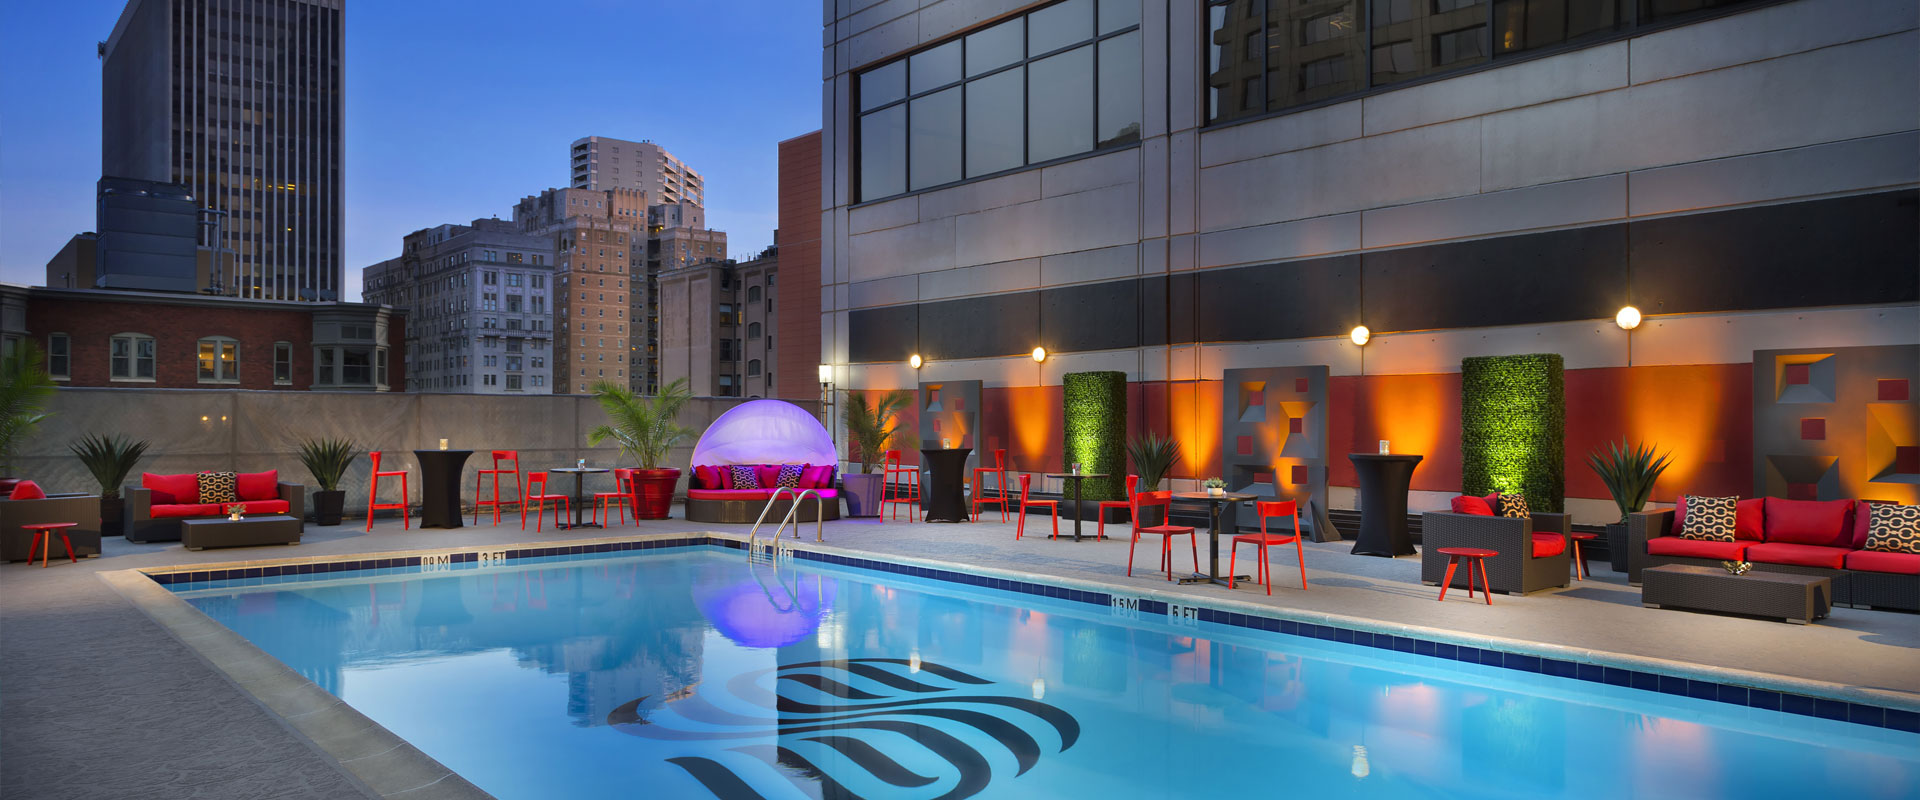 Downtown Philadelphia Hotel Pool